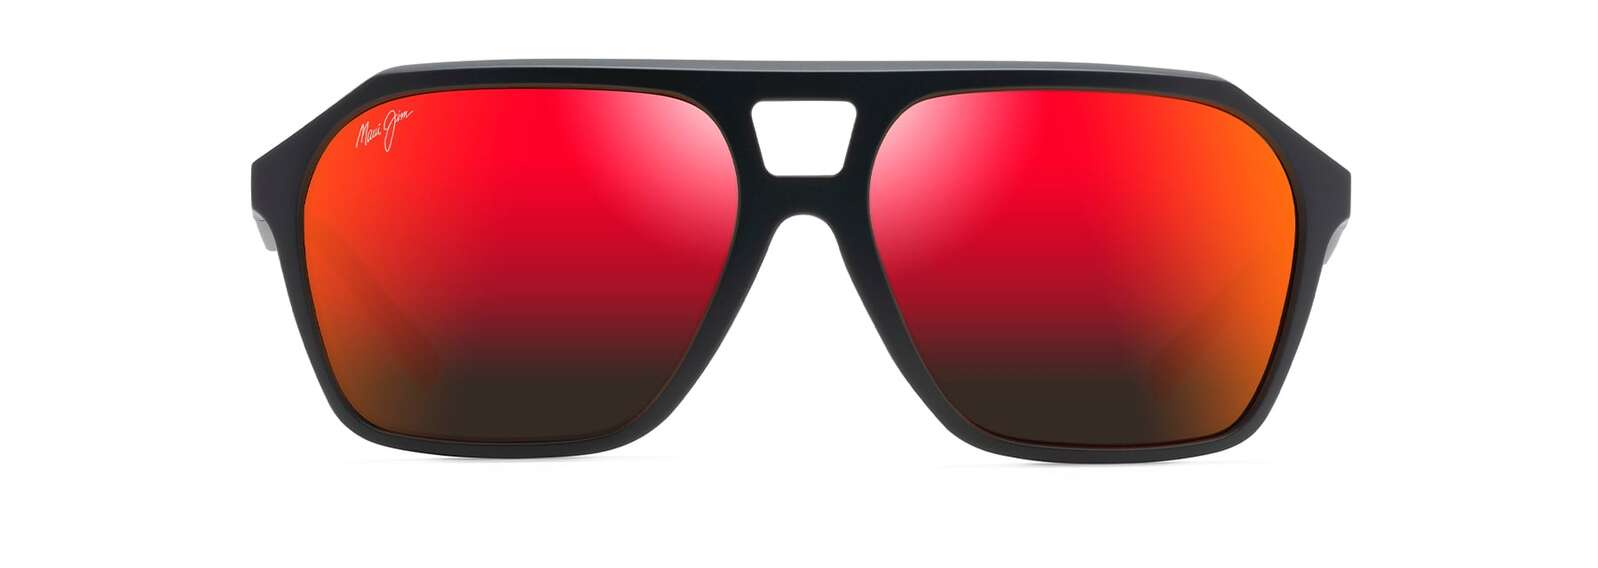 Maui Jim 880-02a Wedges Matte Black Frame Hawaii Lava Glass Lens Sunglasses